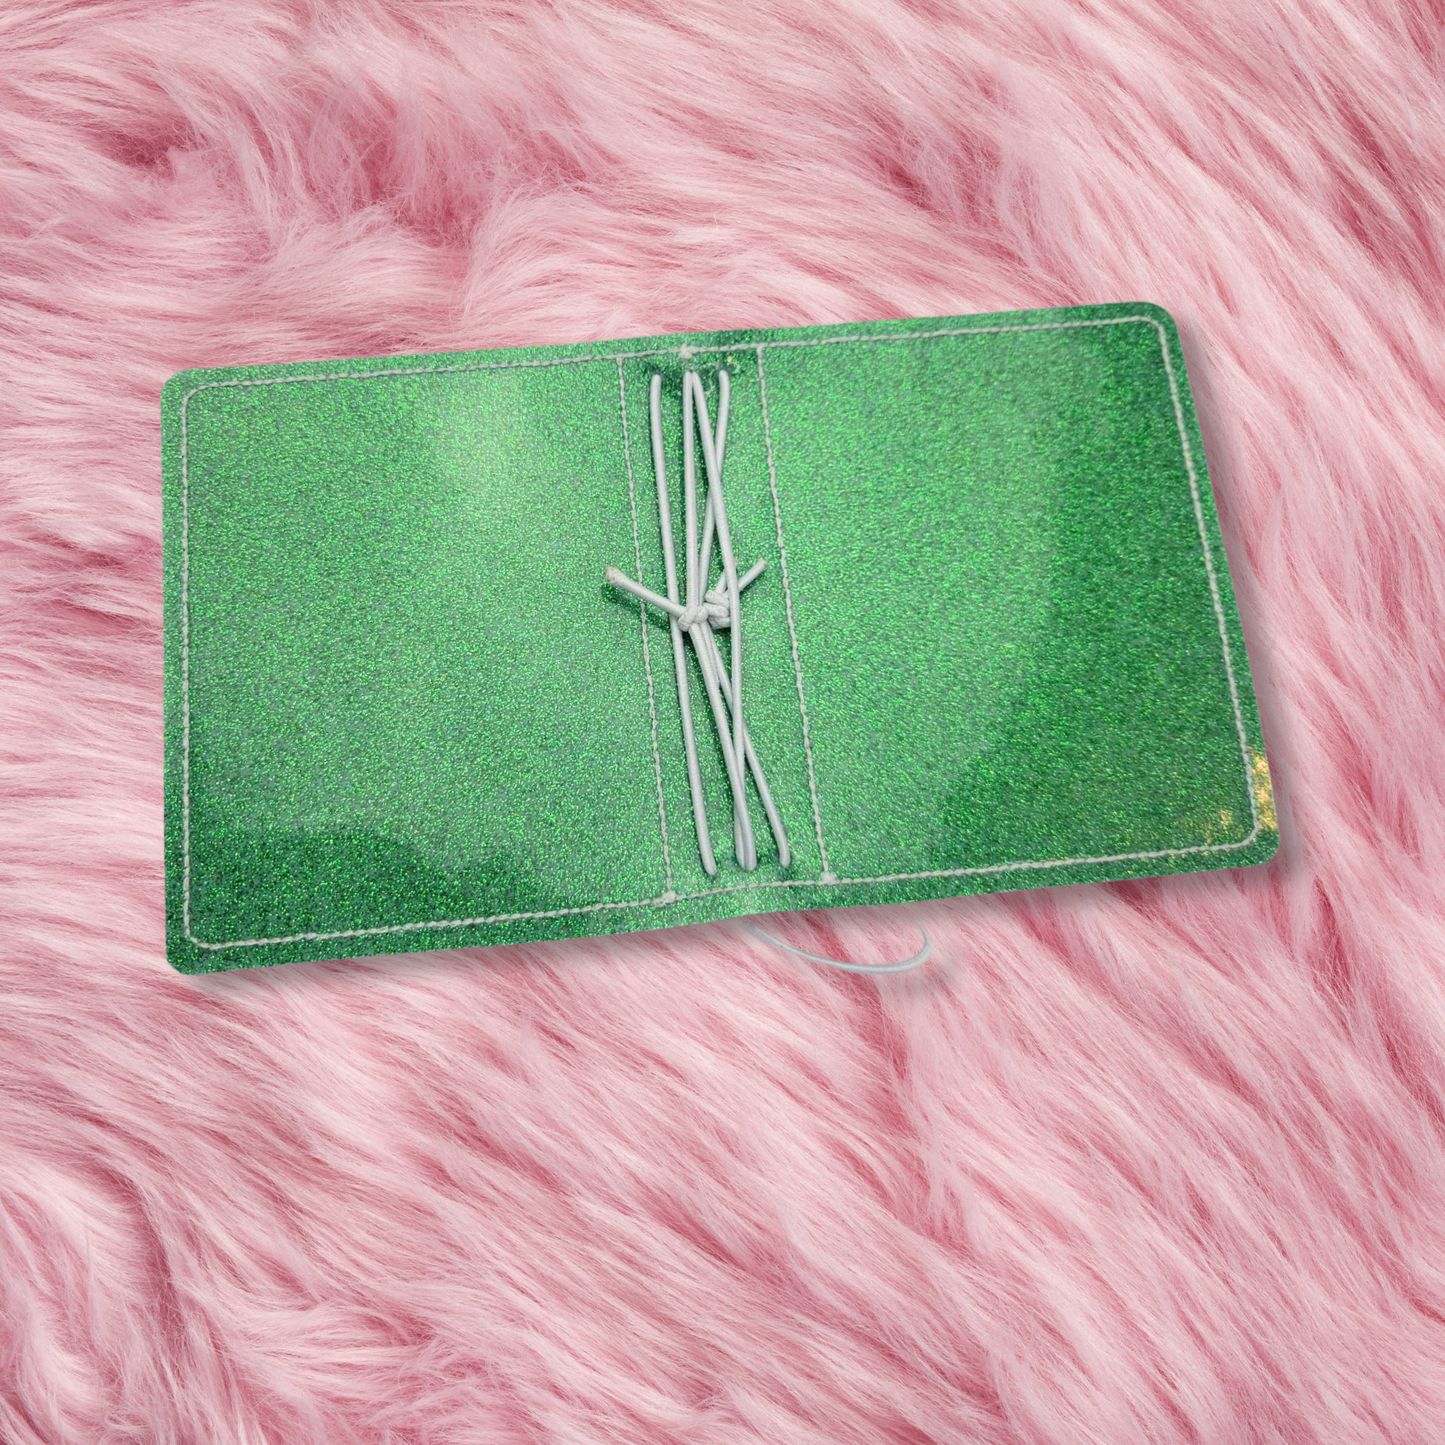 MICRO - Travelers Notebook Handmade with Elastic Closure - Green Glitter w White